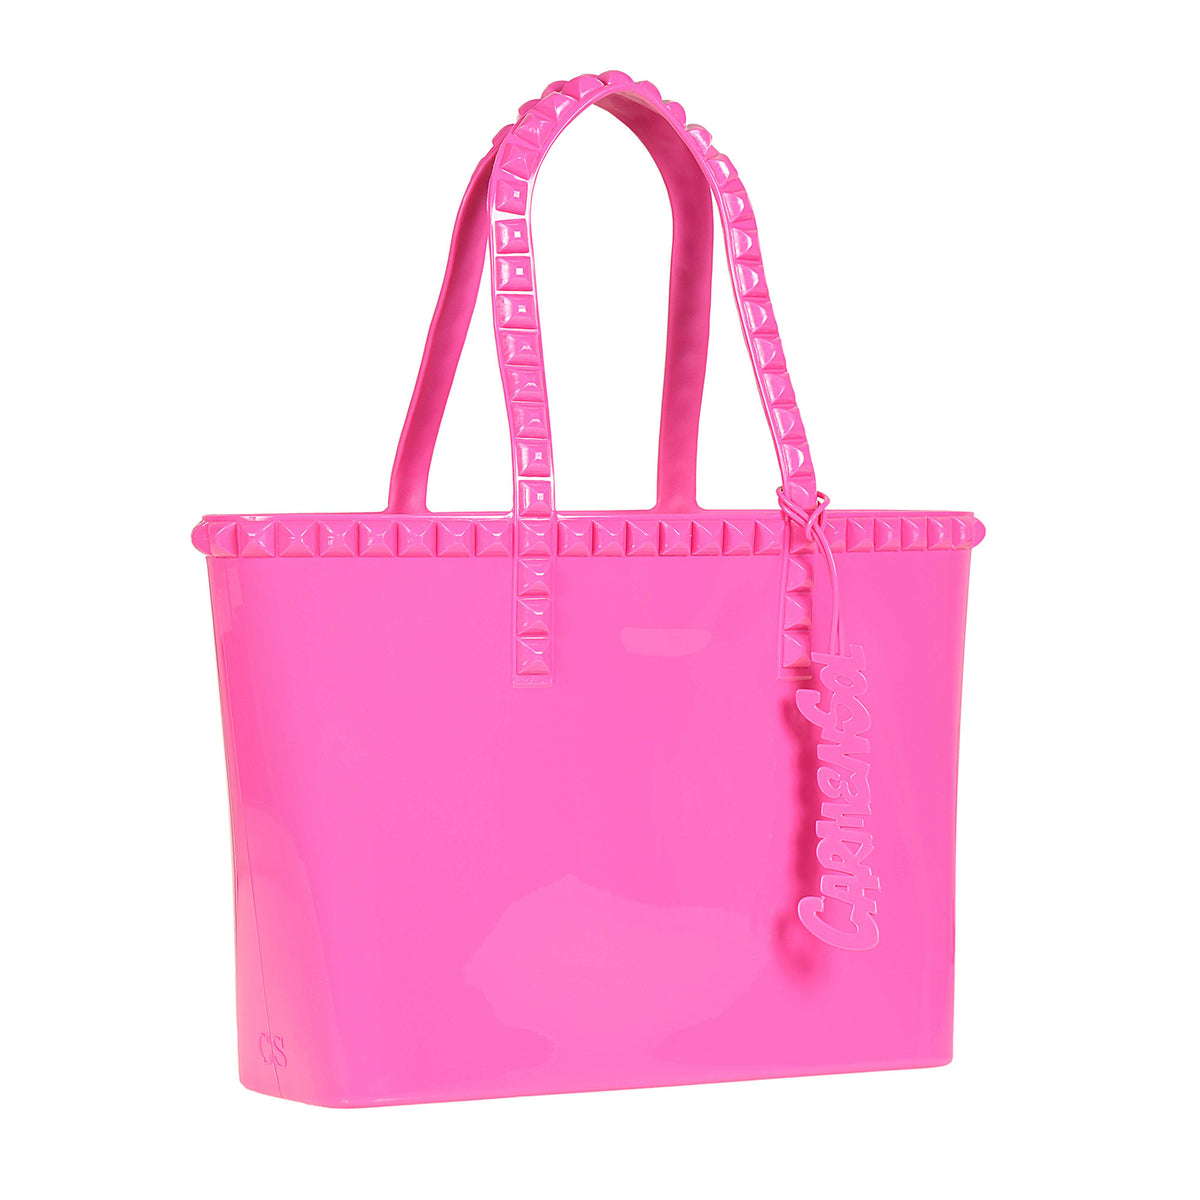 Seba pink jelly bags from Carmen Sol 